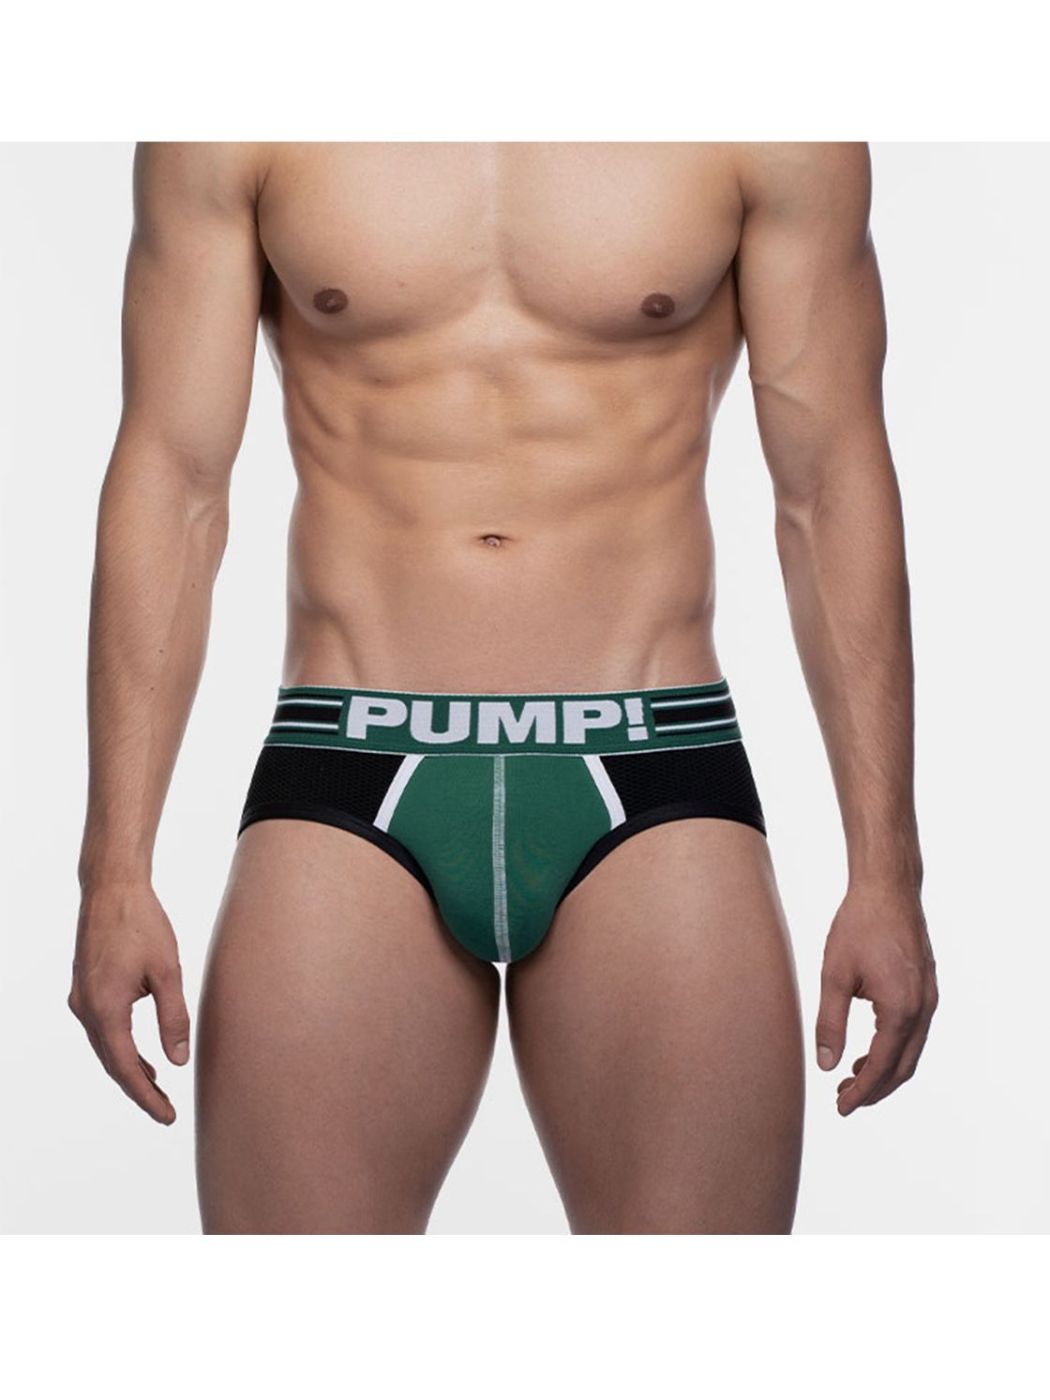 PUMP! Boost Sportboy Jock | Green/White/Black